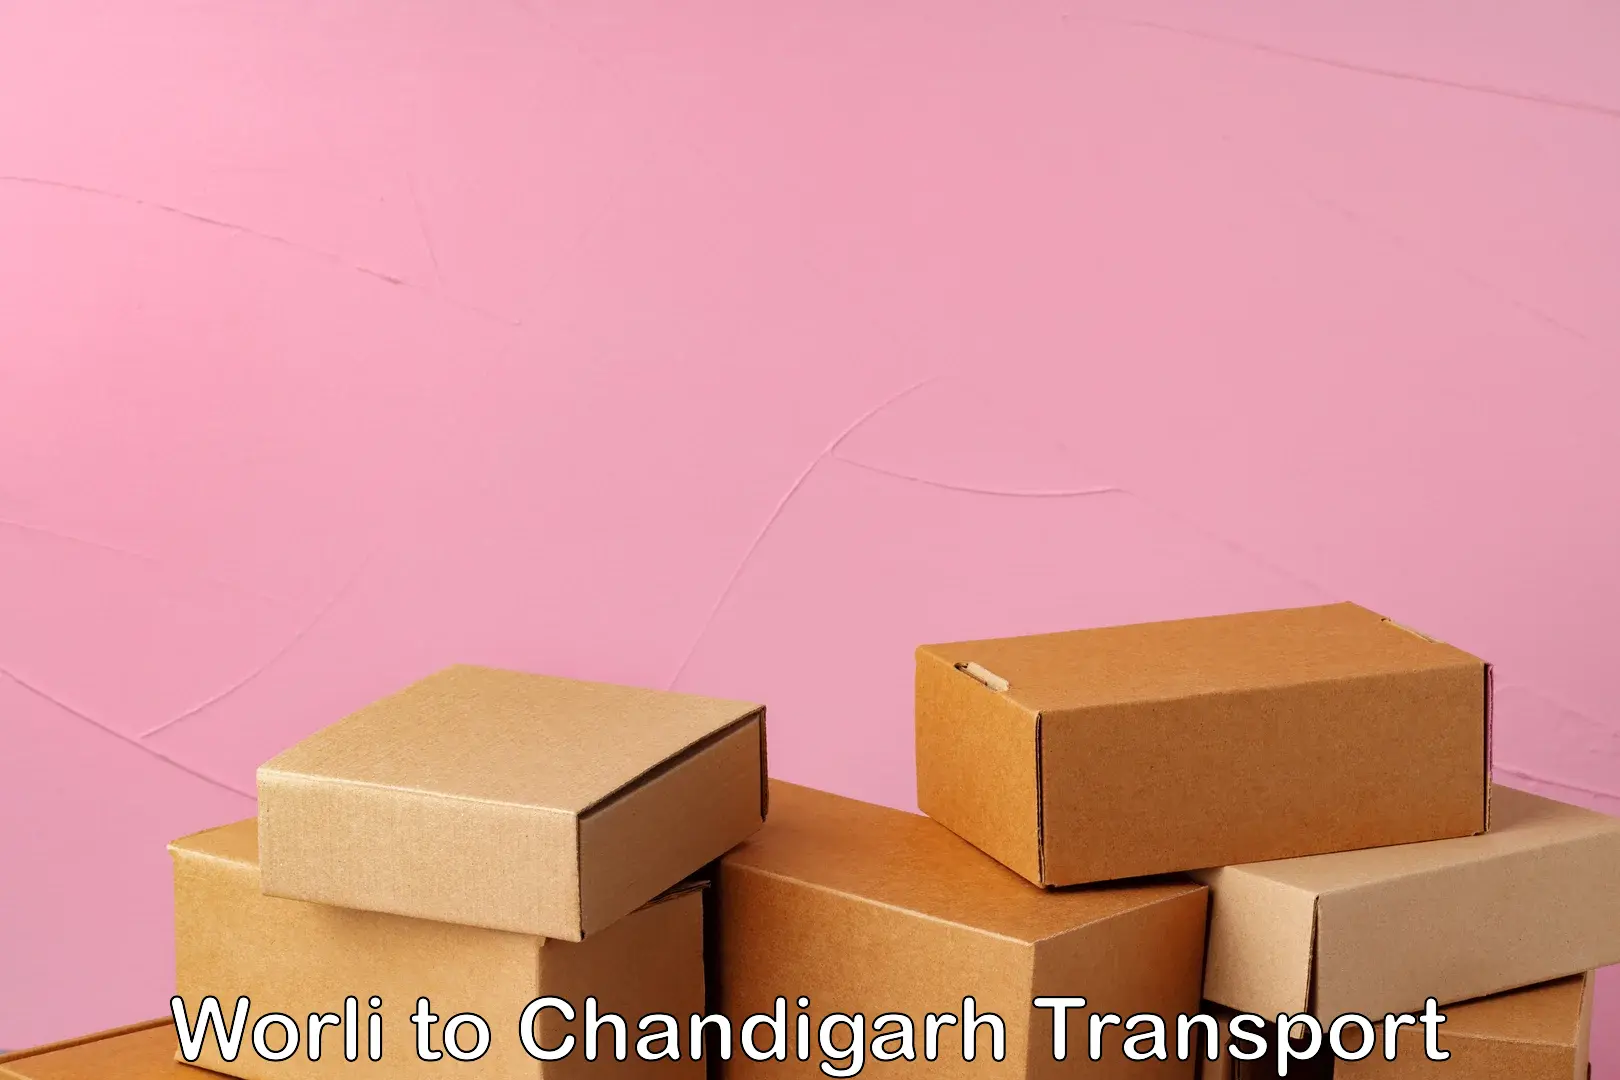 Truck transport companies in India Worli to Chandigarh